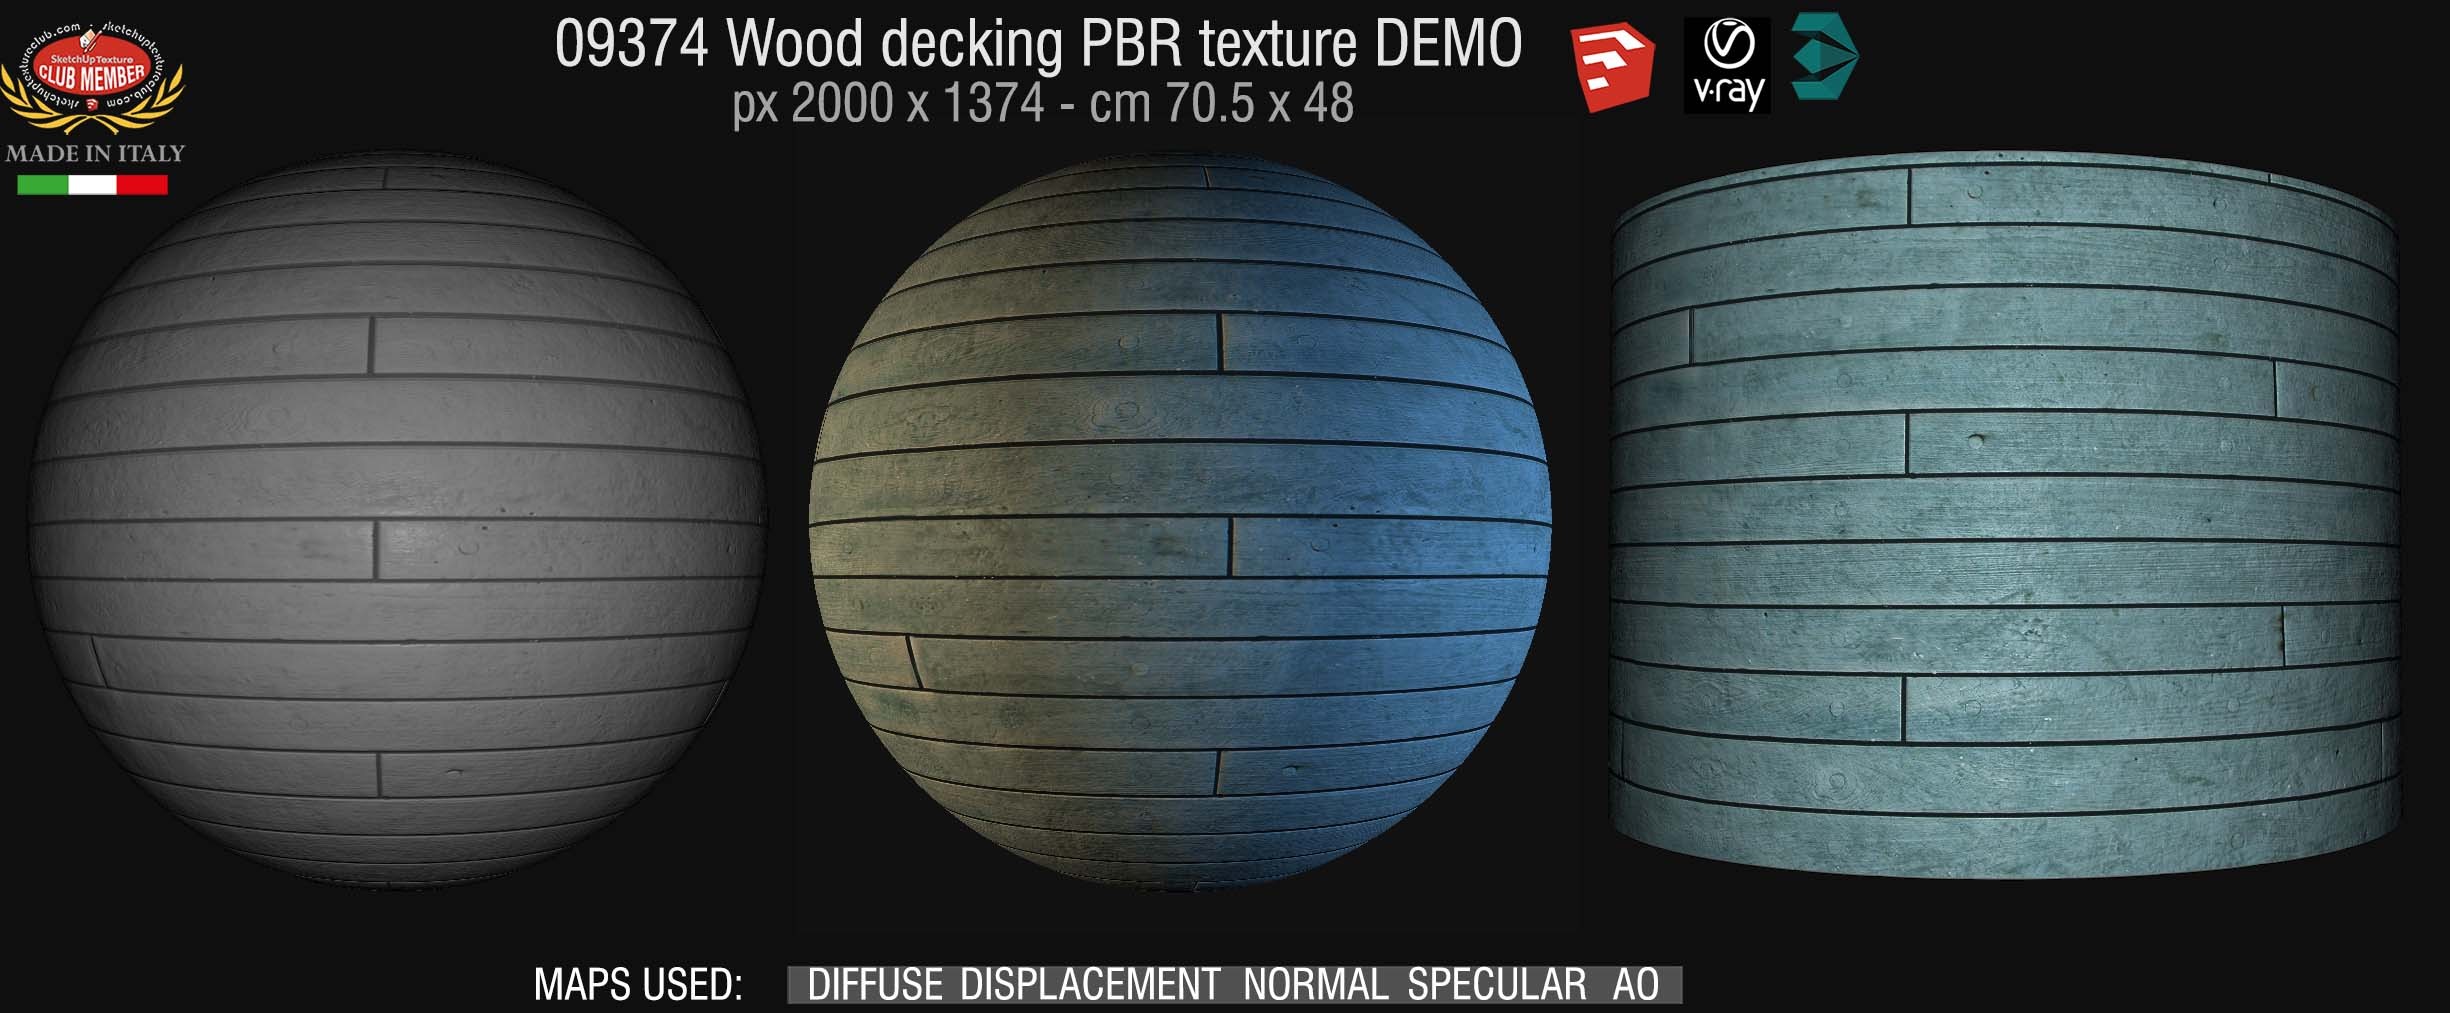 09374 Wood decking PBR texture seamless DEMO